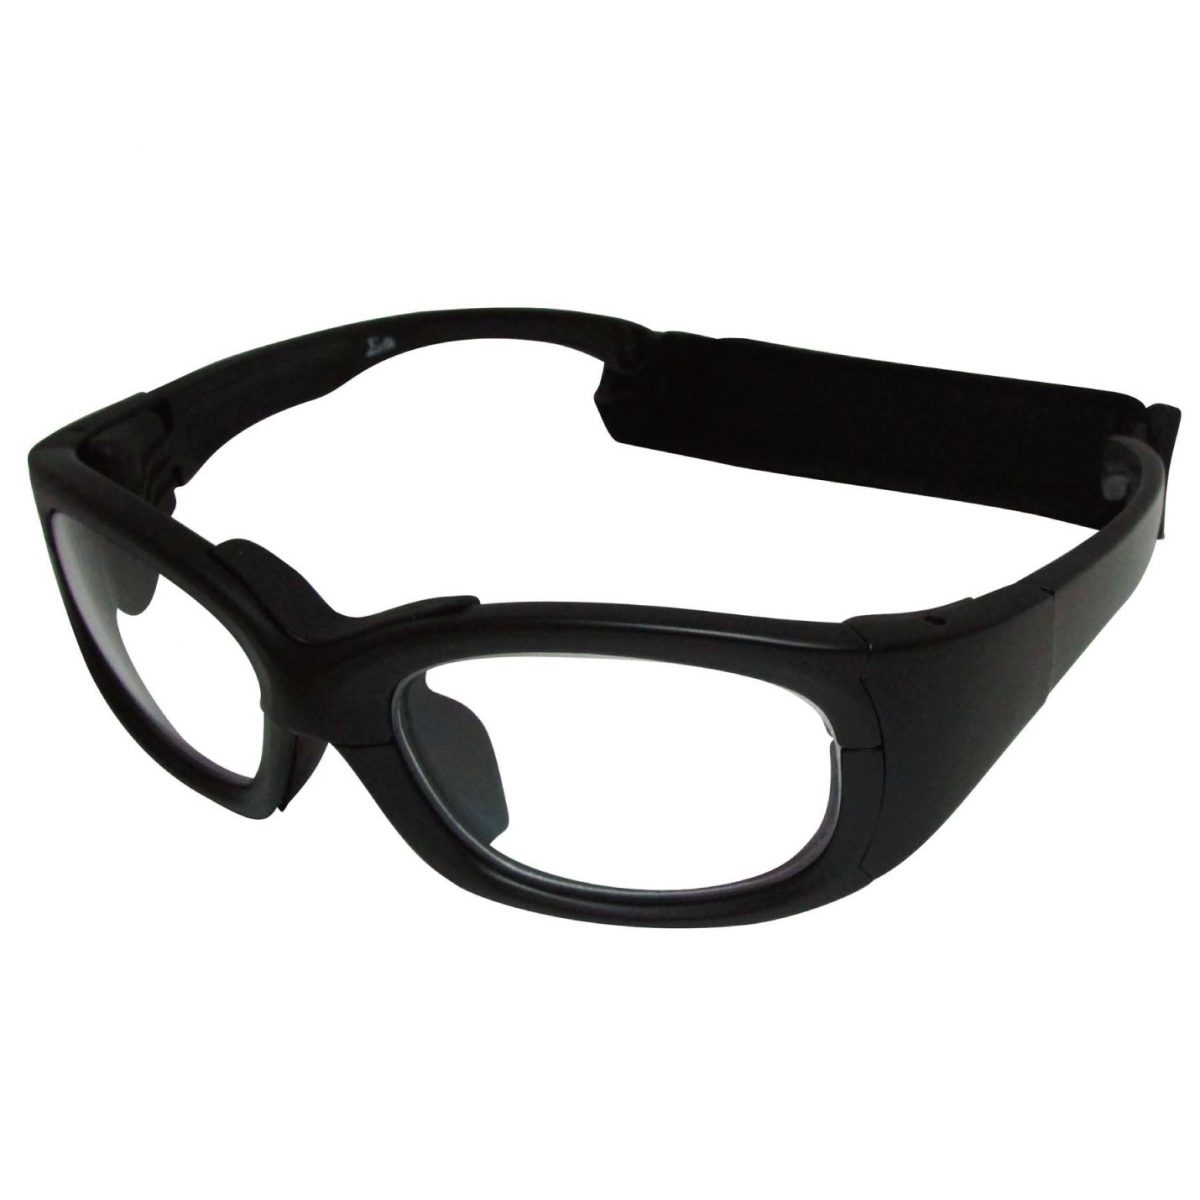 Euta Safety Sports Goggles